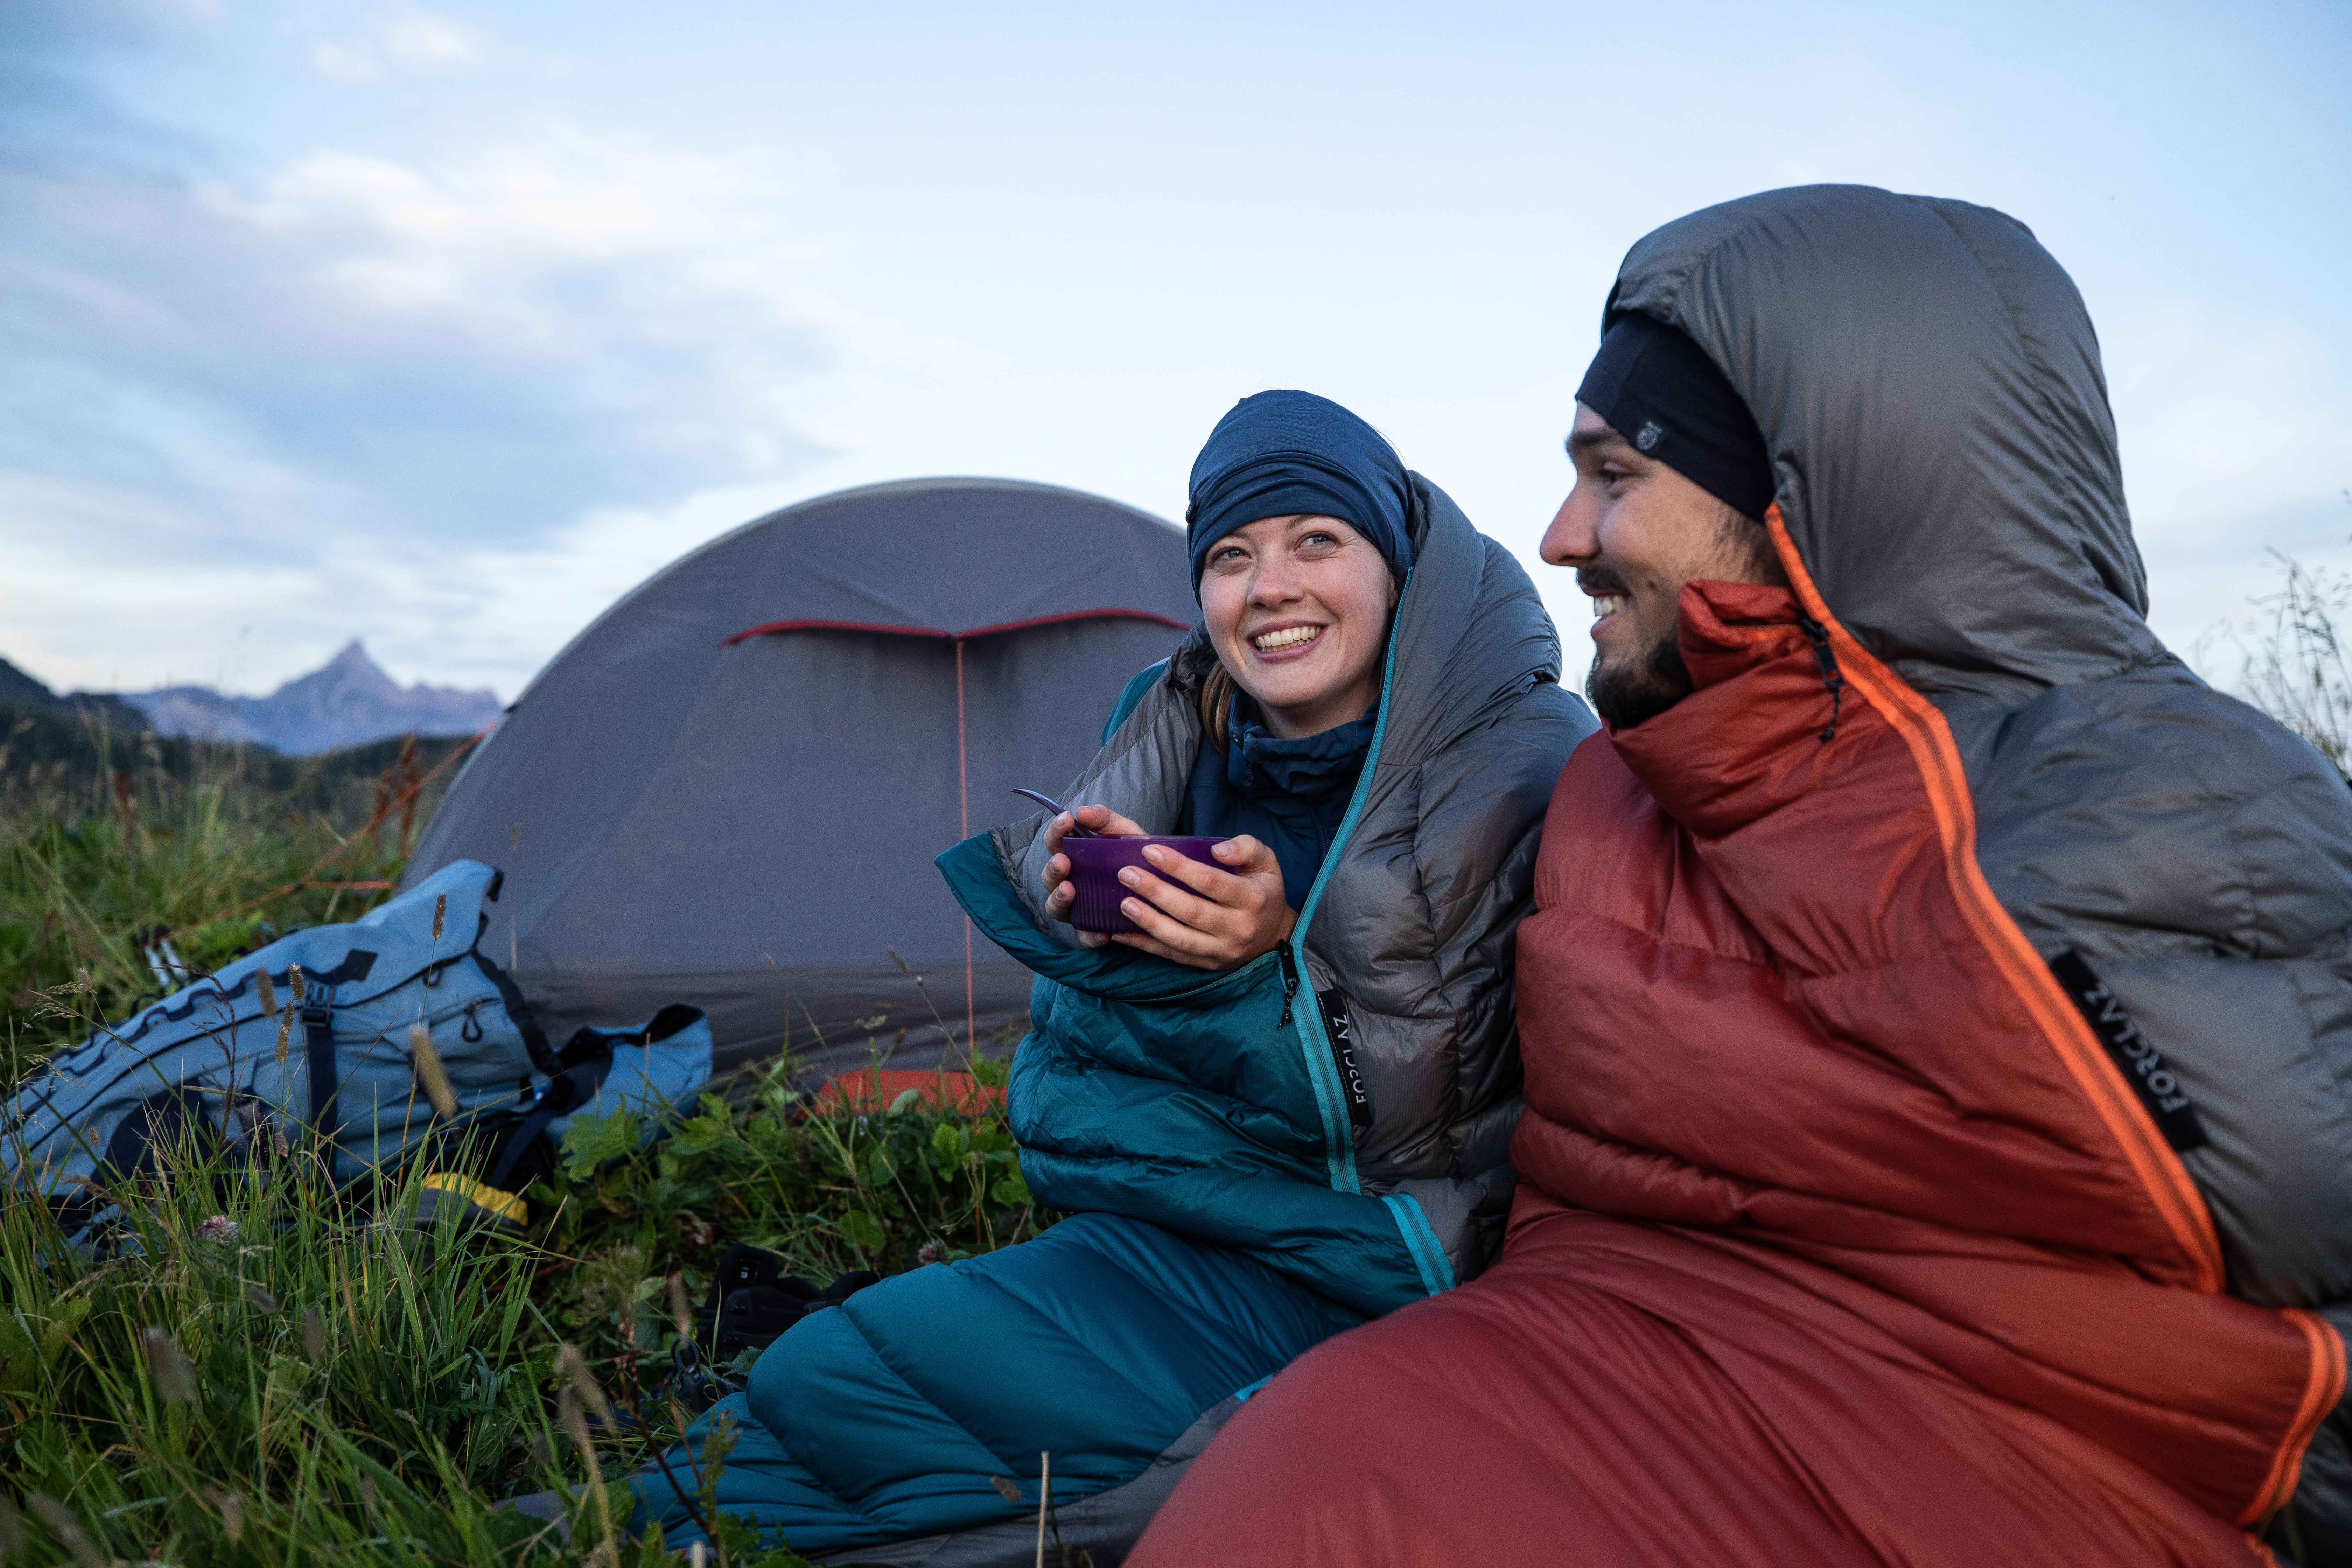 Camping Sleeping Bag -5°C to 0°C – MT 900 Dark Sepia - FORCLAZ